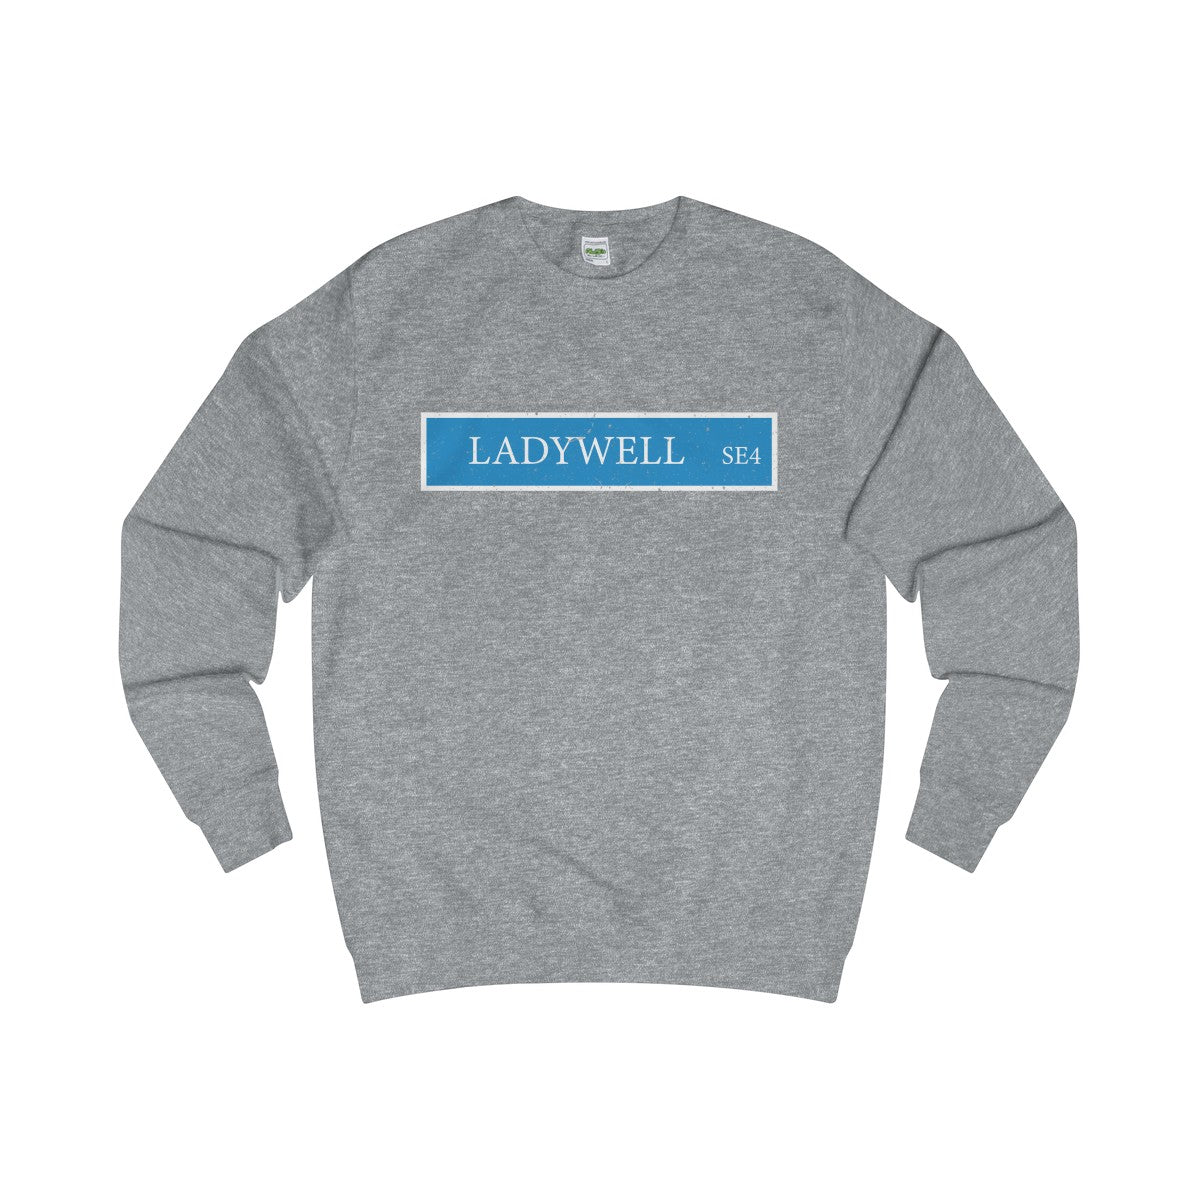 Ladywell SE4 Sweater